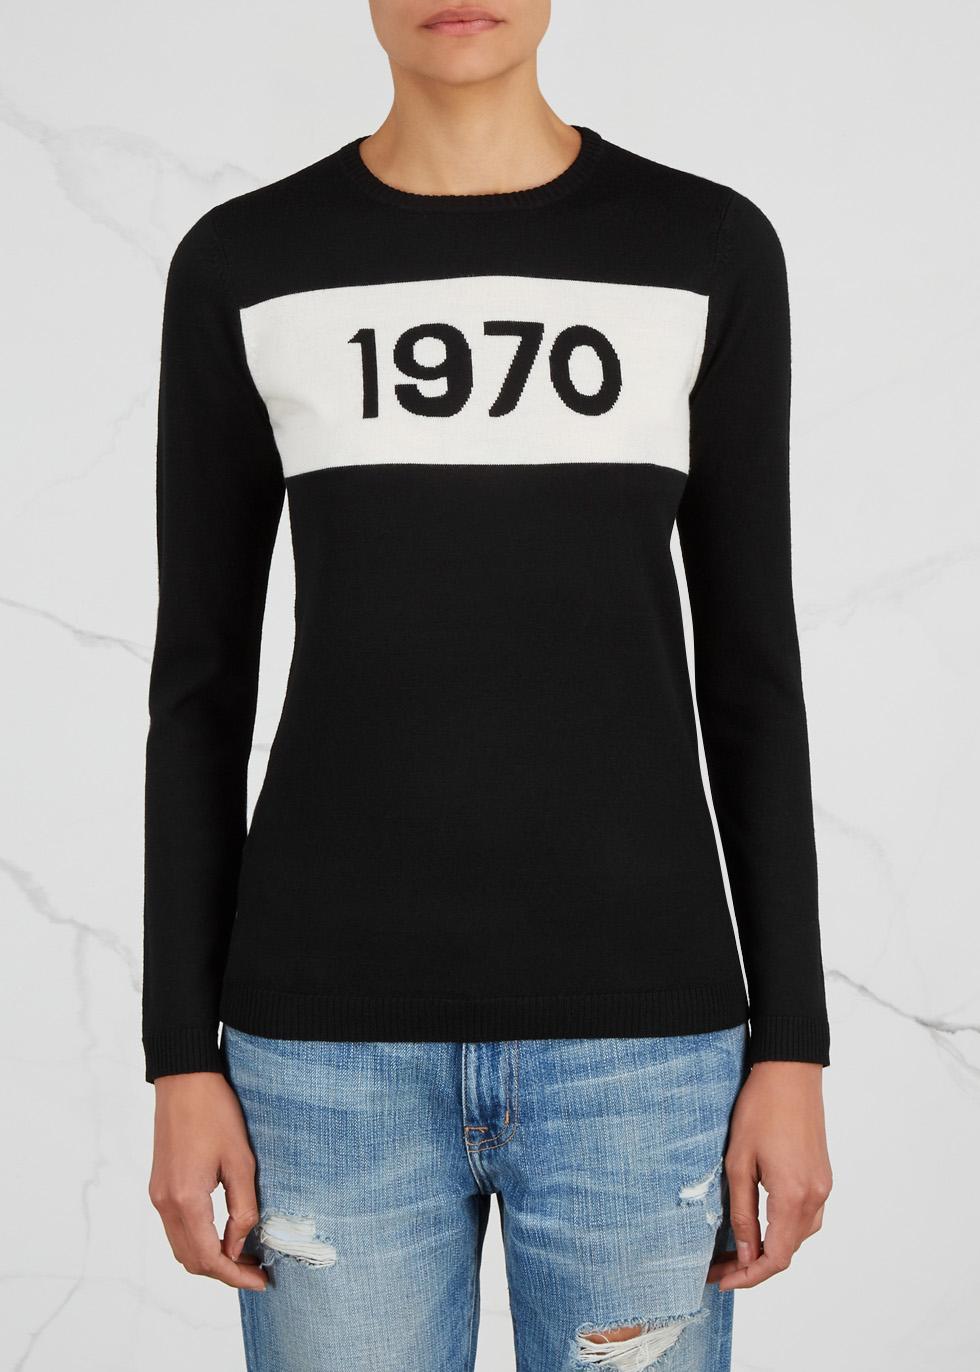 Bella Freud Wool 1970 Jumper in Black - Save 62% | Lyst